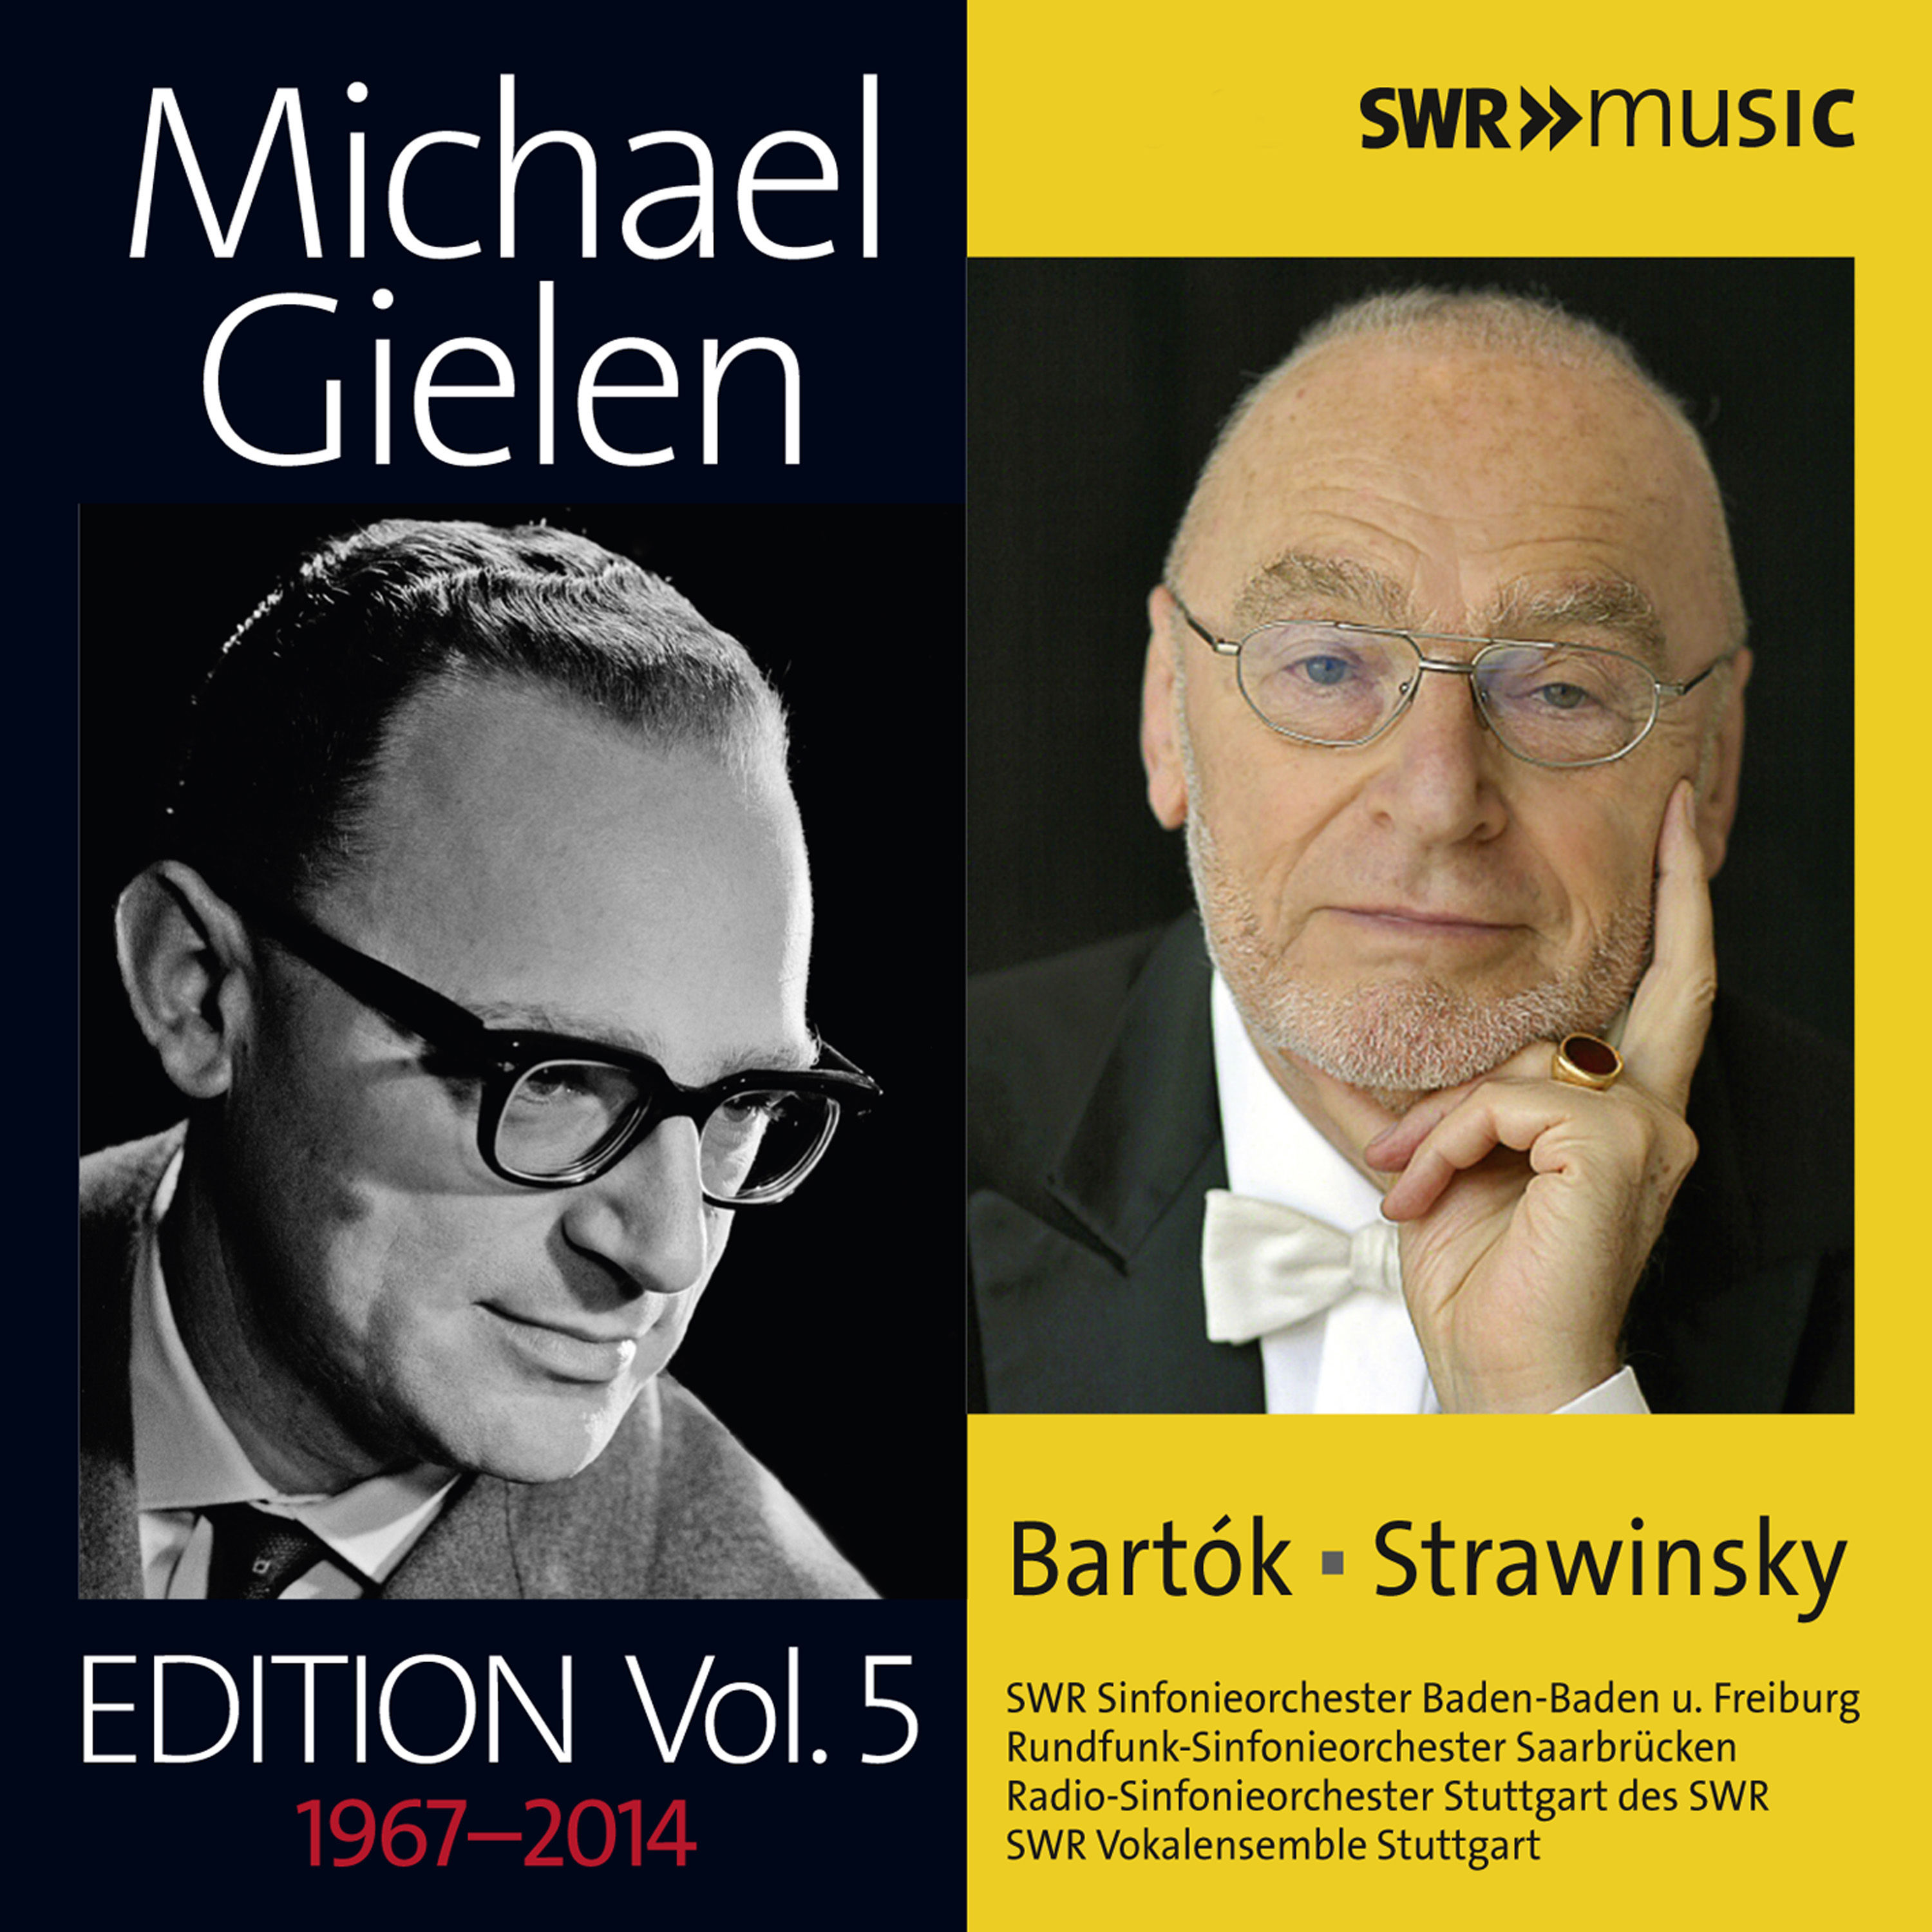 SWR Sinfonieorchester - Michael Gielen Edition Vol. 5 cd06 Bartok Strawinsky